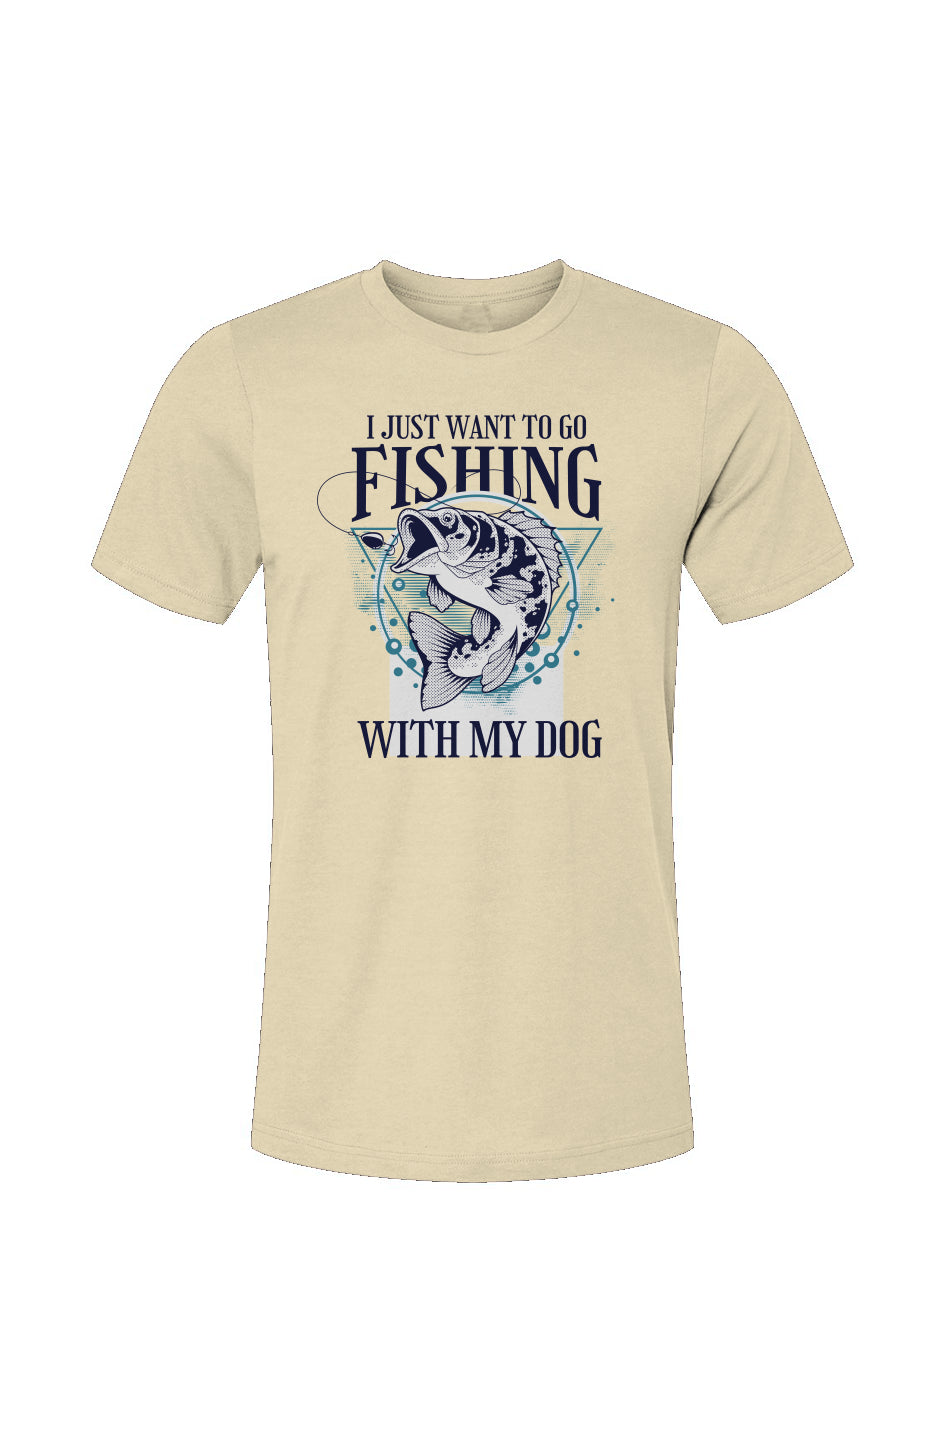 Unisex Jersey T-Shirt-Fishing